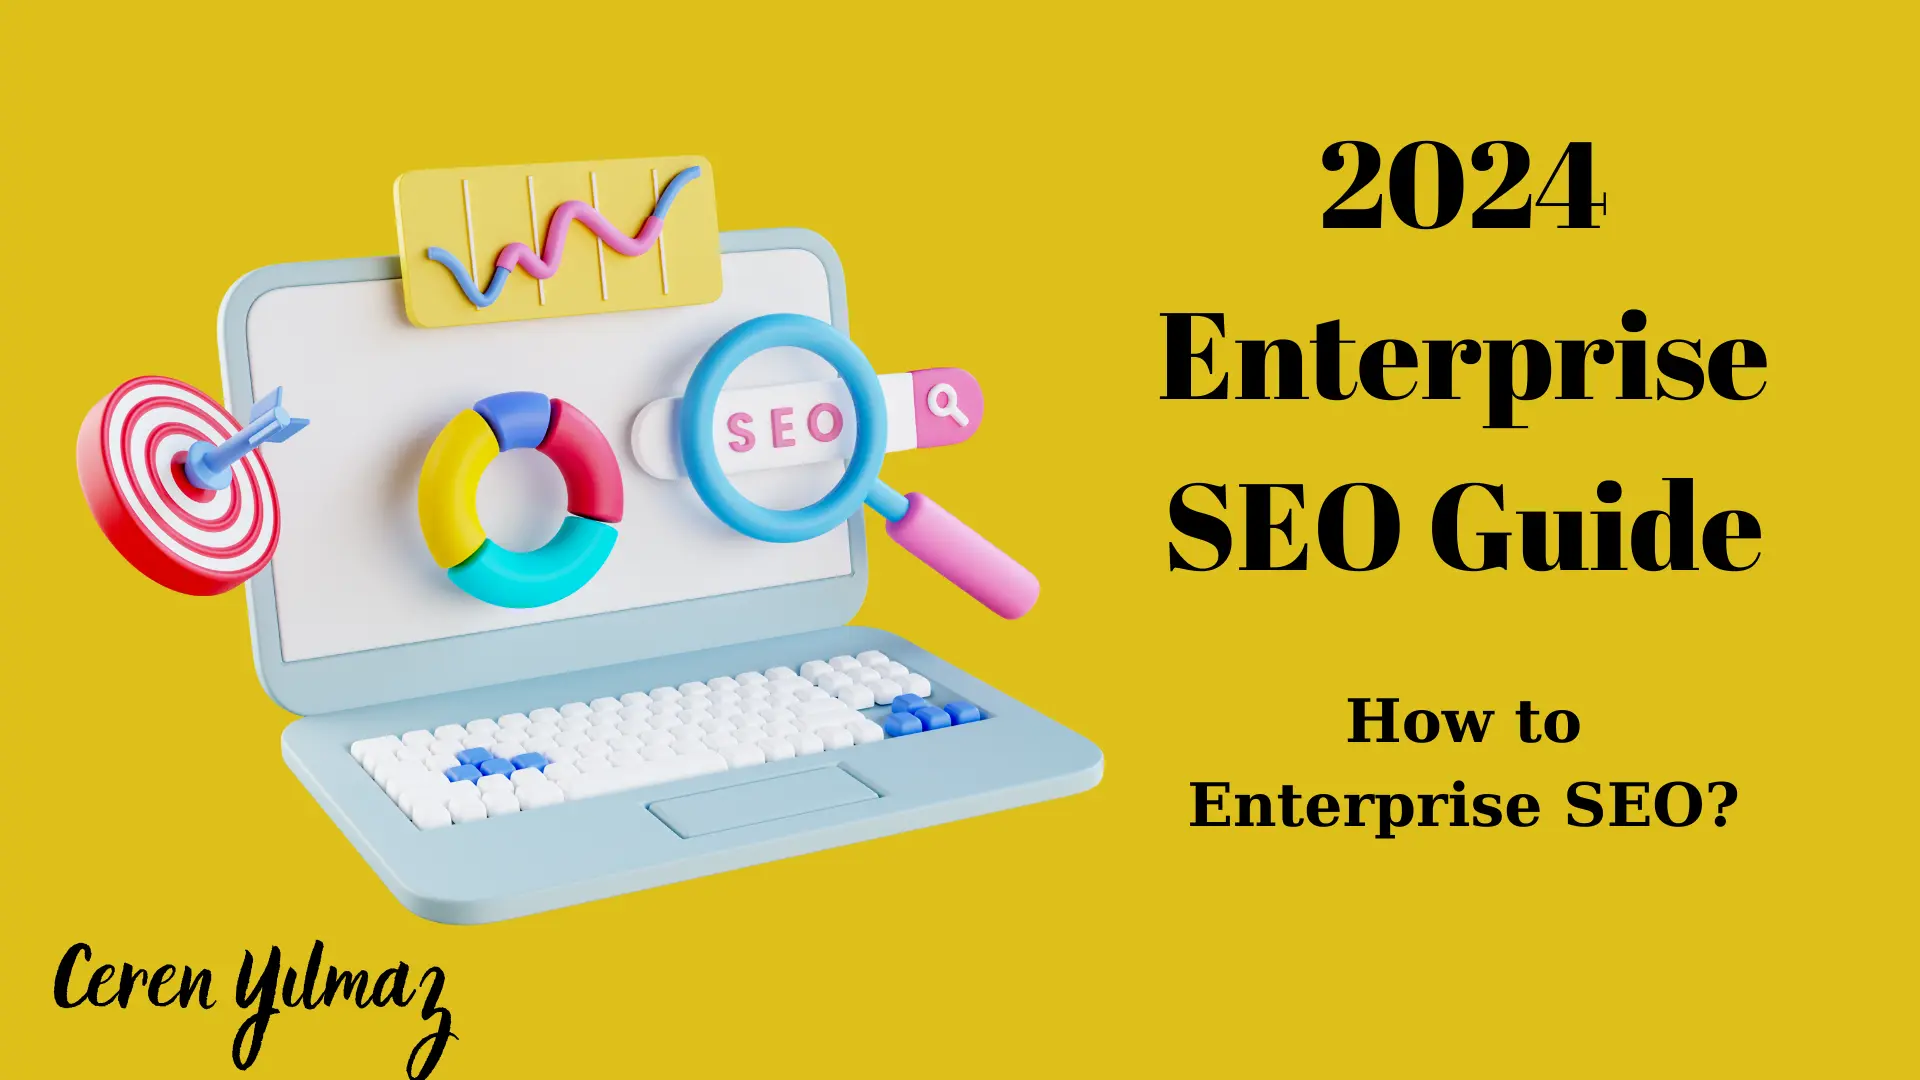 What is Enterprise SEO? 2024 Enterprise SEO Guide